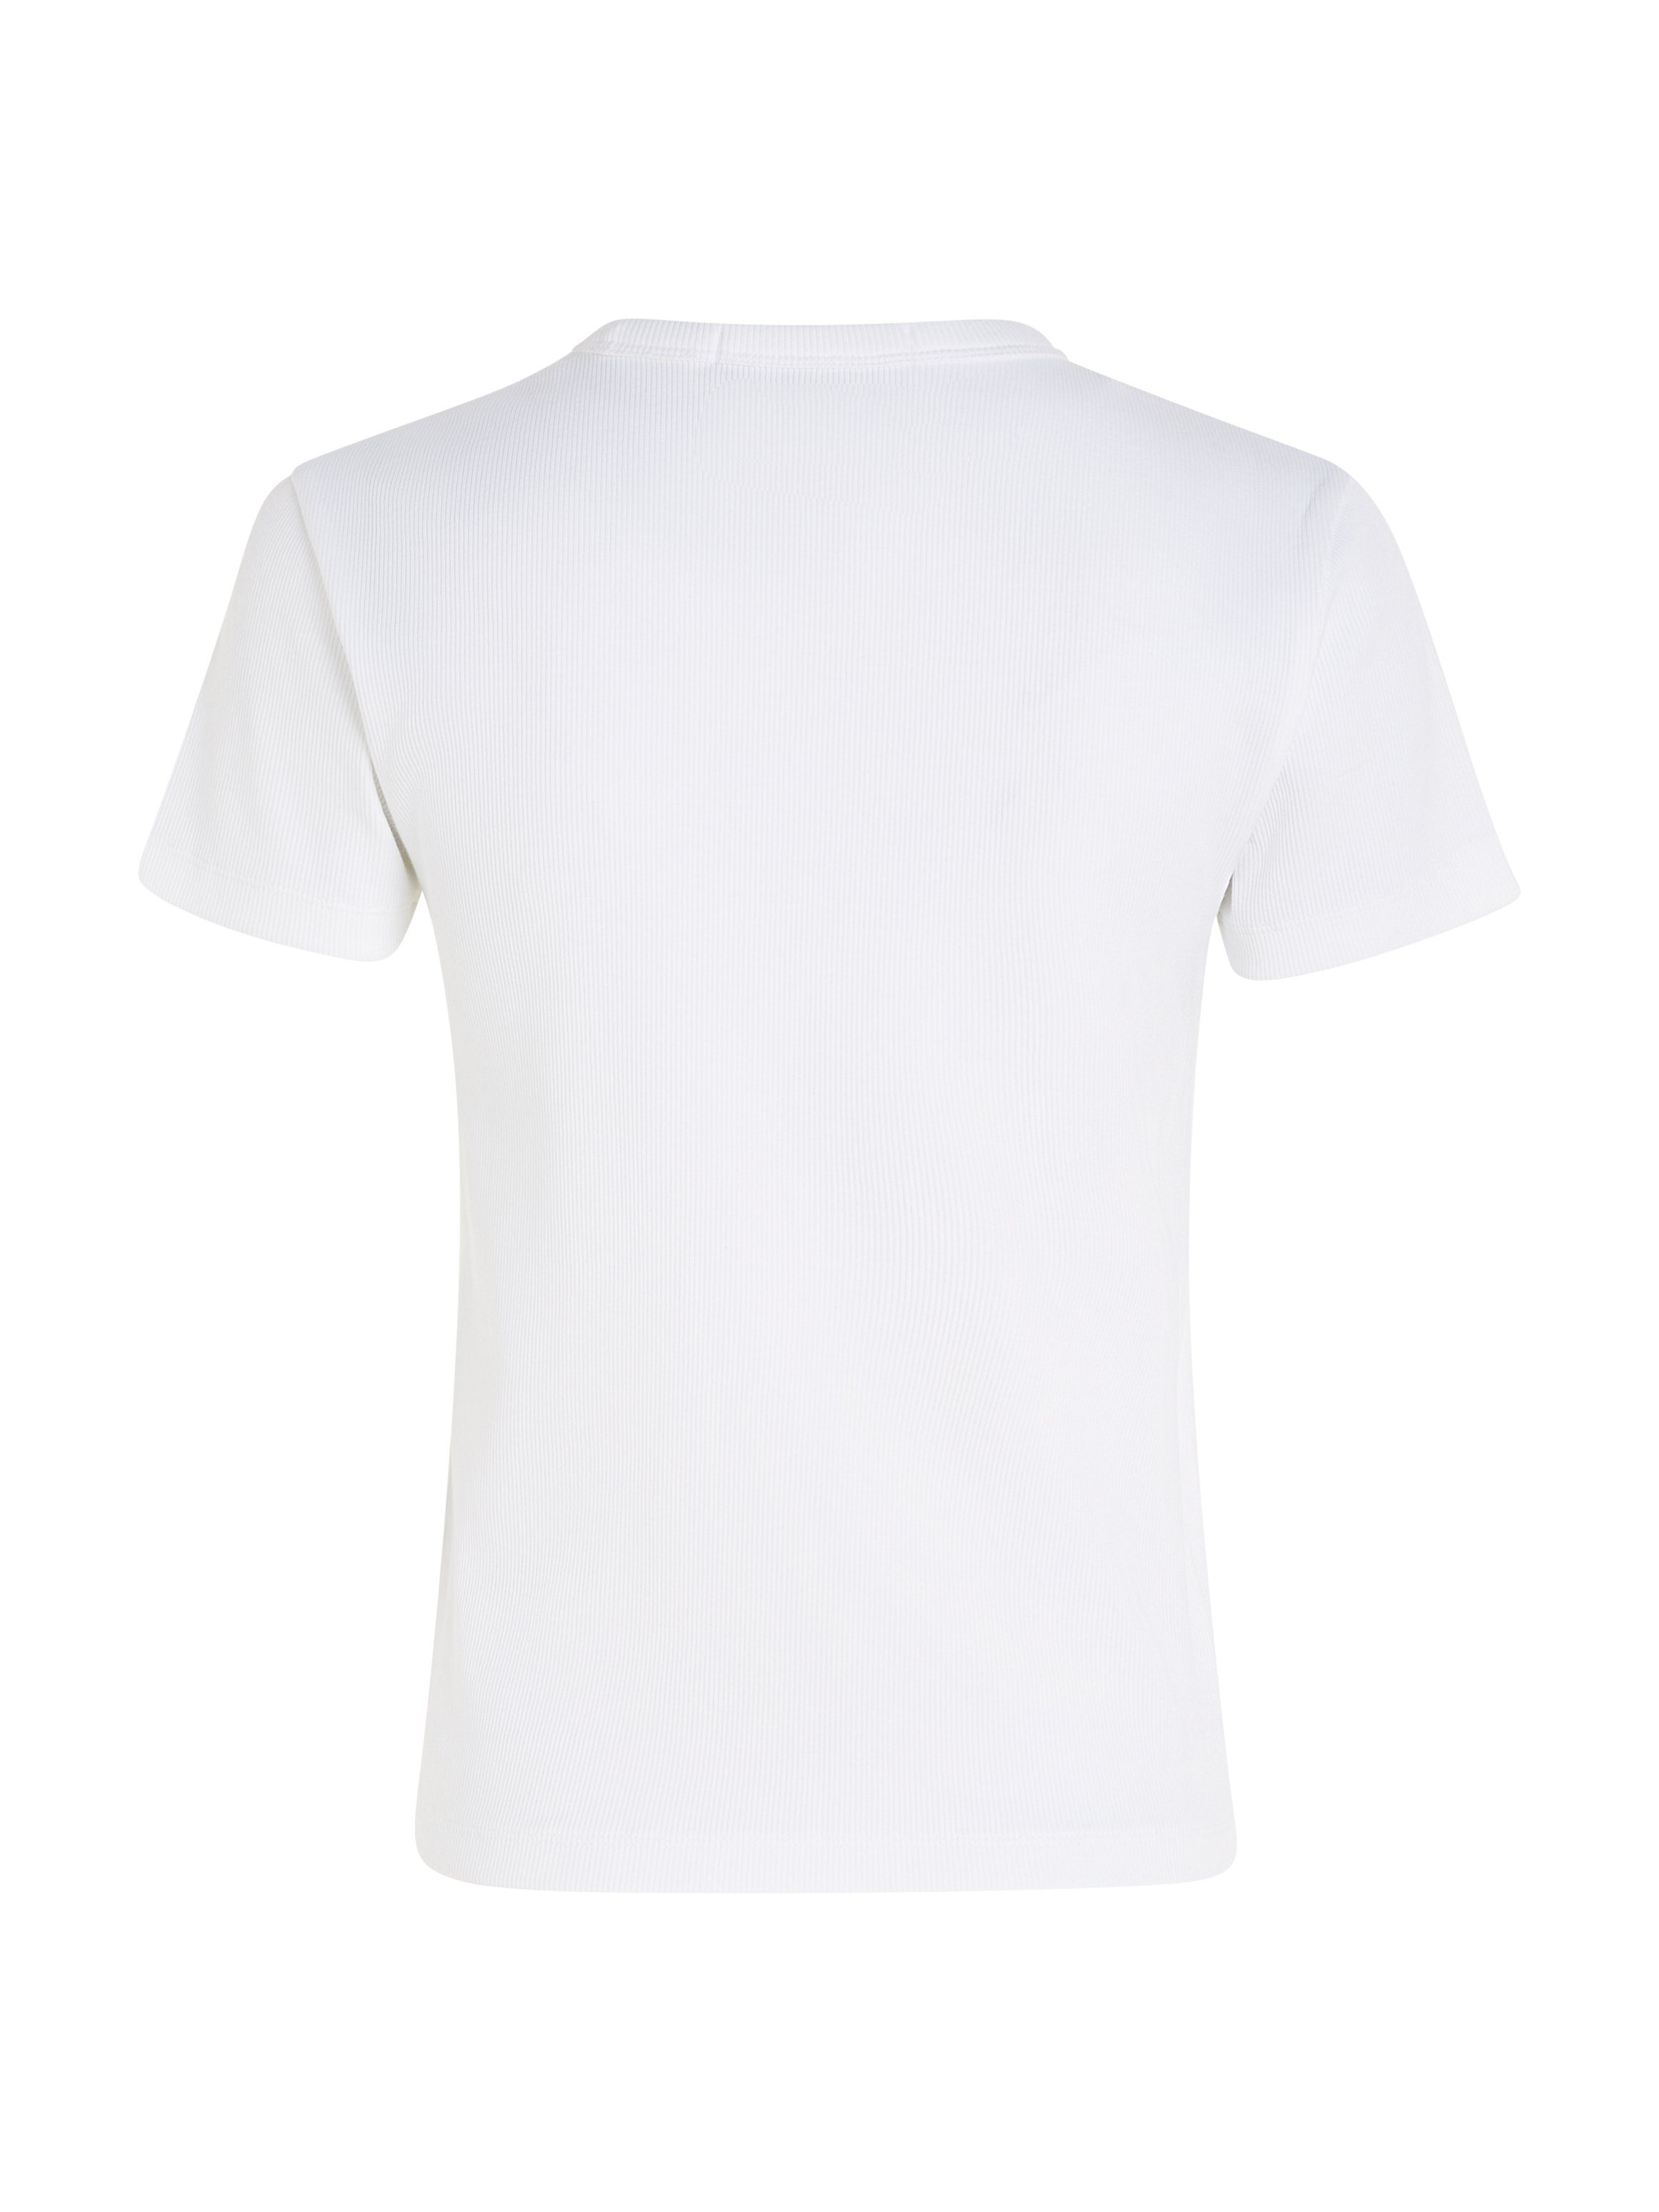 White Calvin TEE T-Shirt Klein RIB Jeans Bright WOVEN REGULAR LABEL